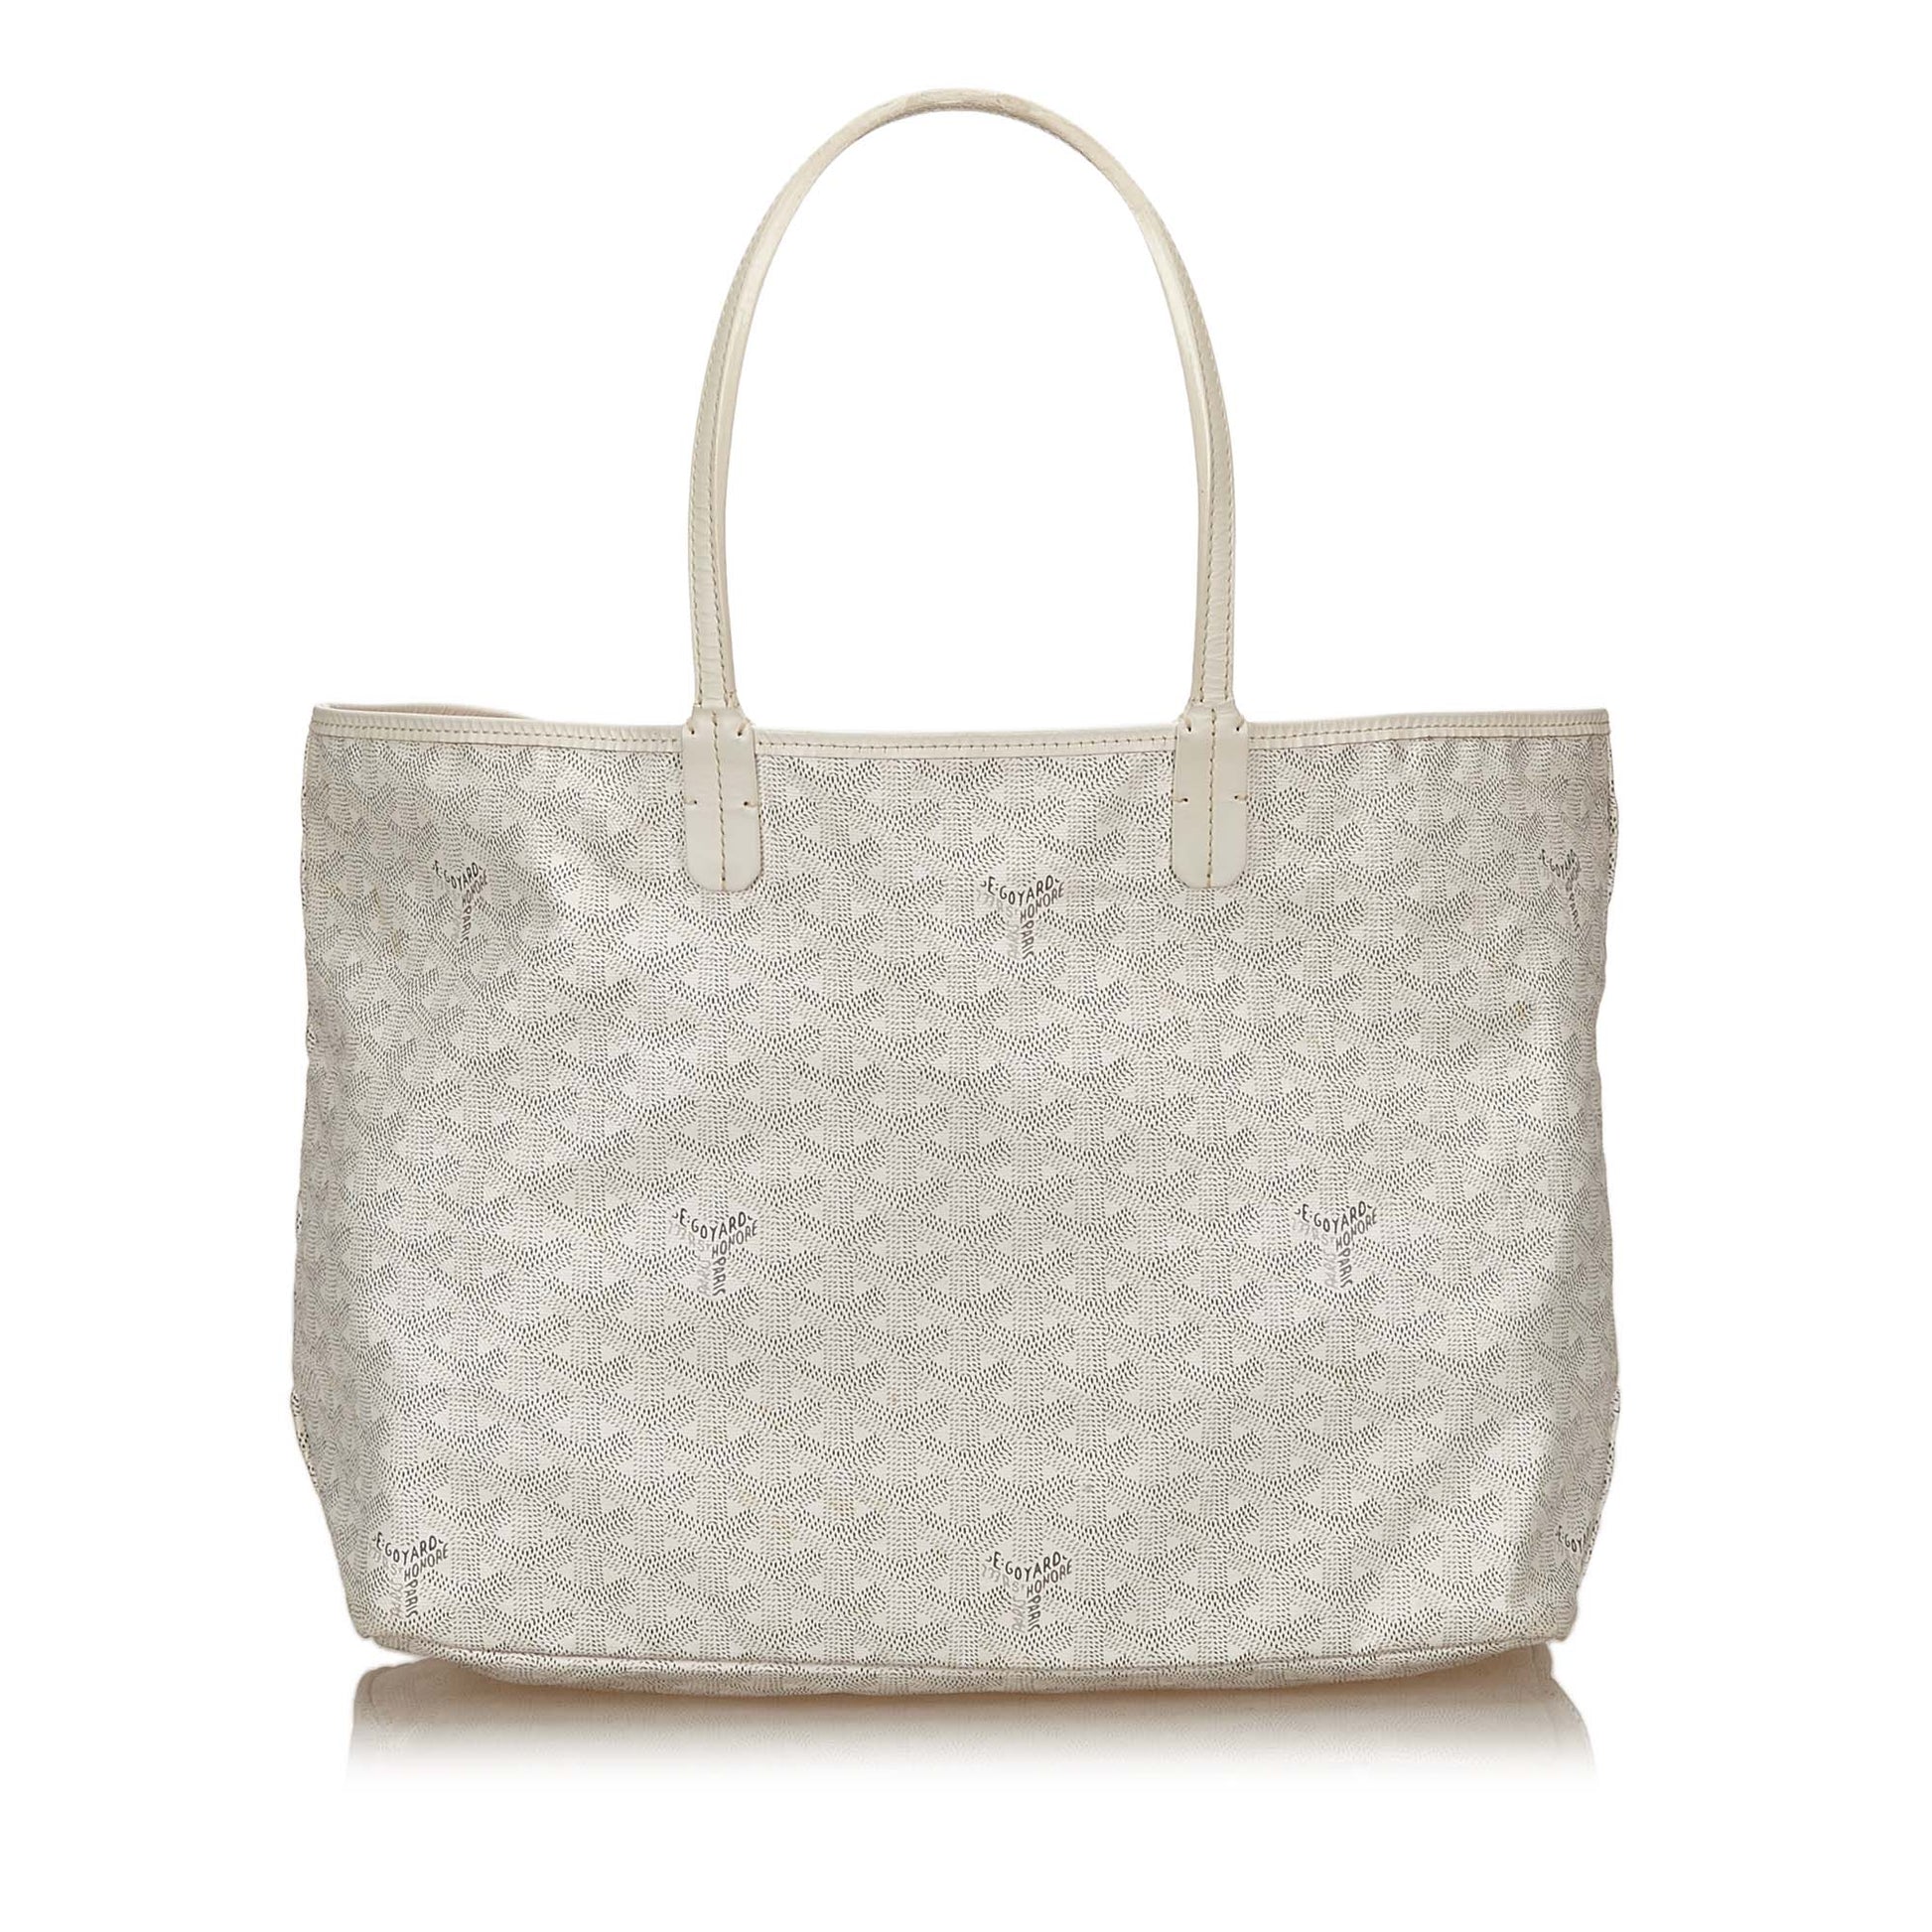 Shop Goya Goyard Bag online